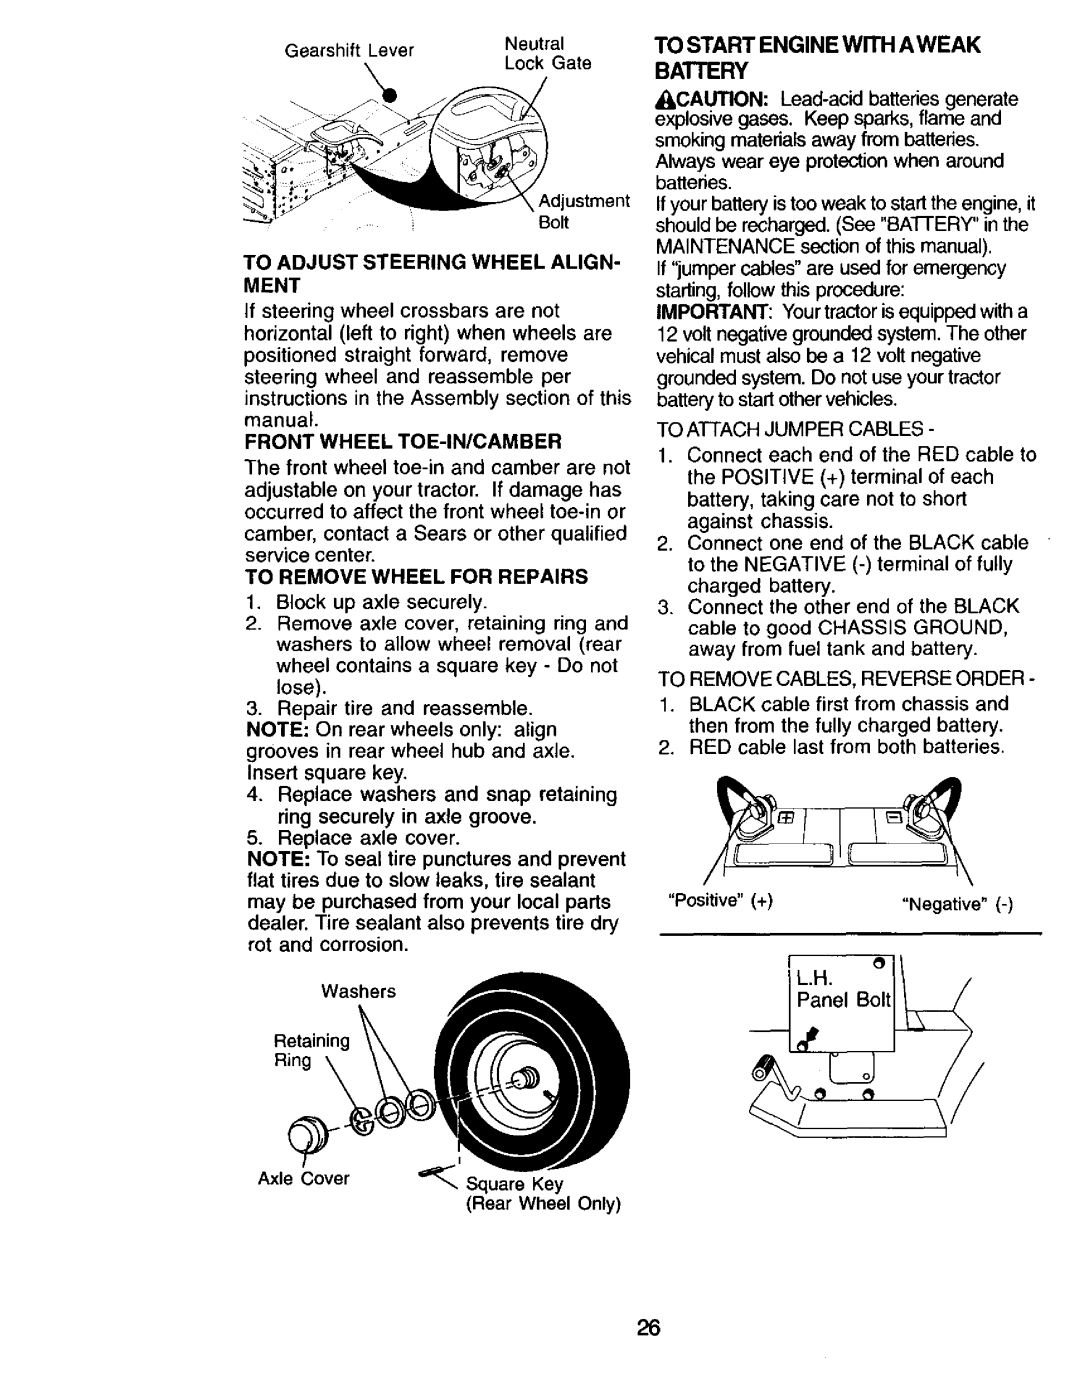 Craftsman 917.271815 owner manual To Start Enginewith Aweak Battery 